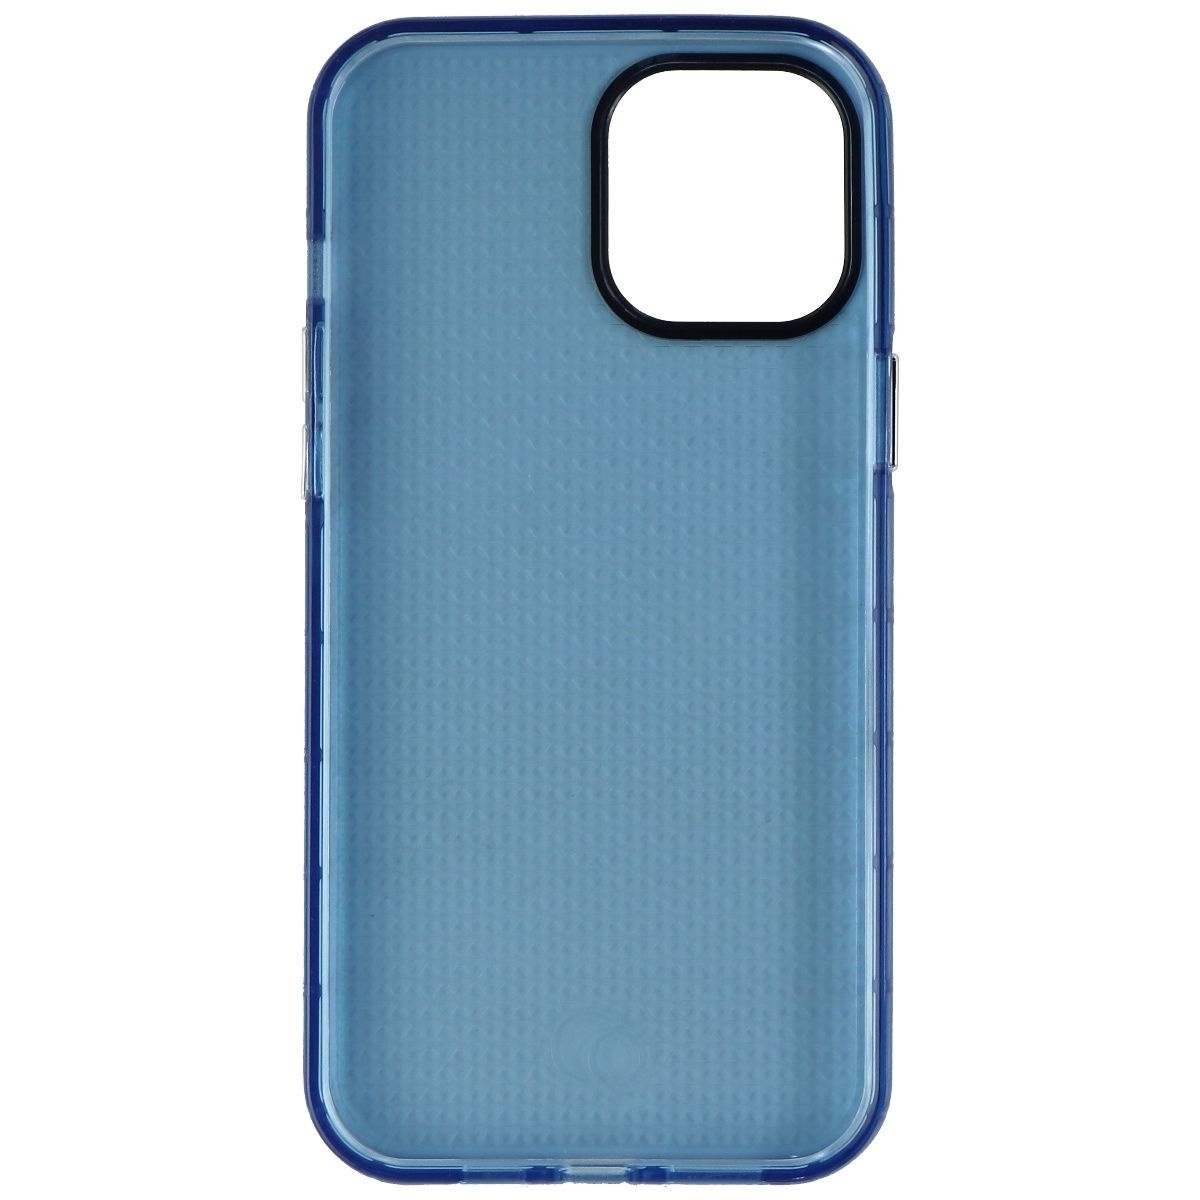 Nimbus9 Phantom 2 Flexible Gel Case For Apple IPhone 12 Pro Max - Pacific Blue